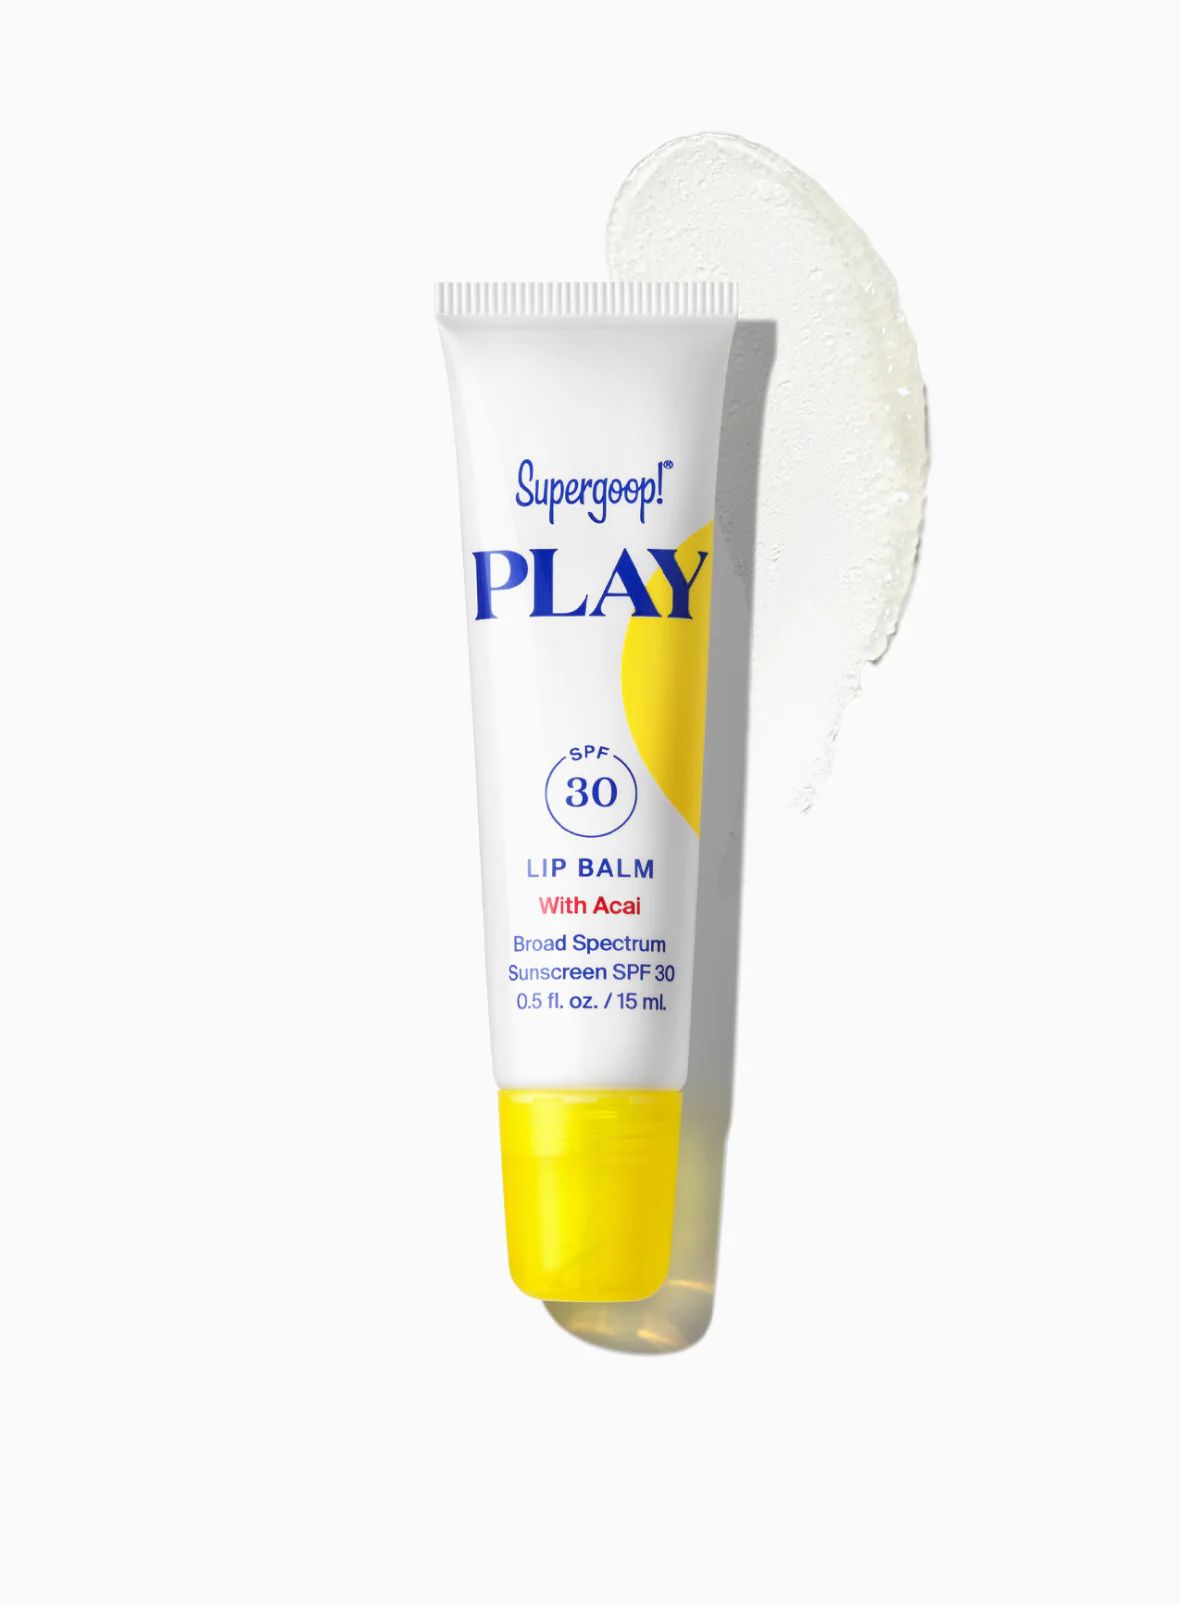 PLAY Lip Balm SPF 30 | Supergoop